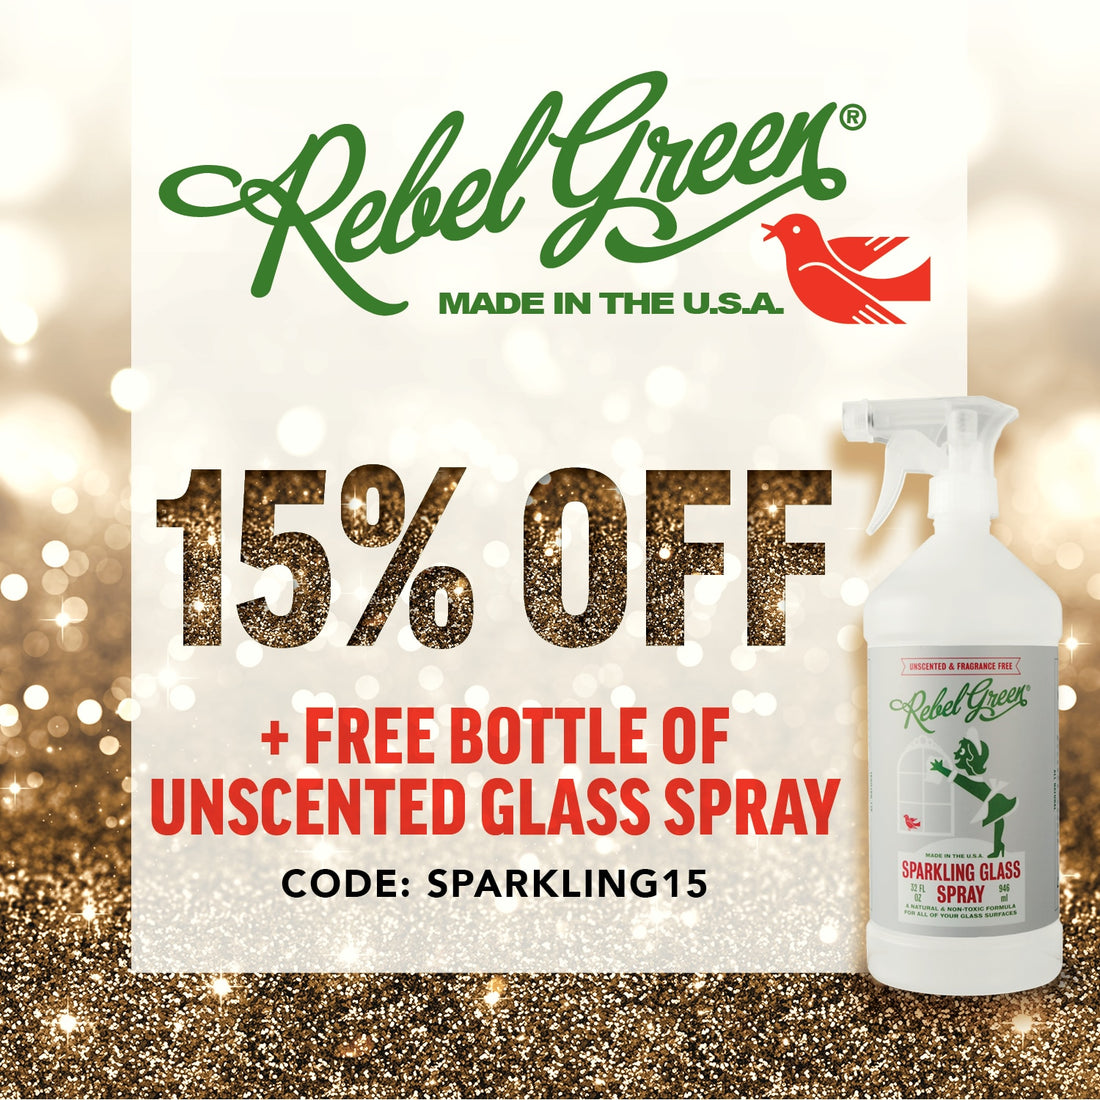 December offer 15% off free sparkling glass spray Rebel Green coupon code